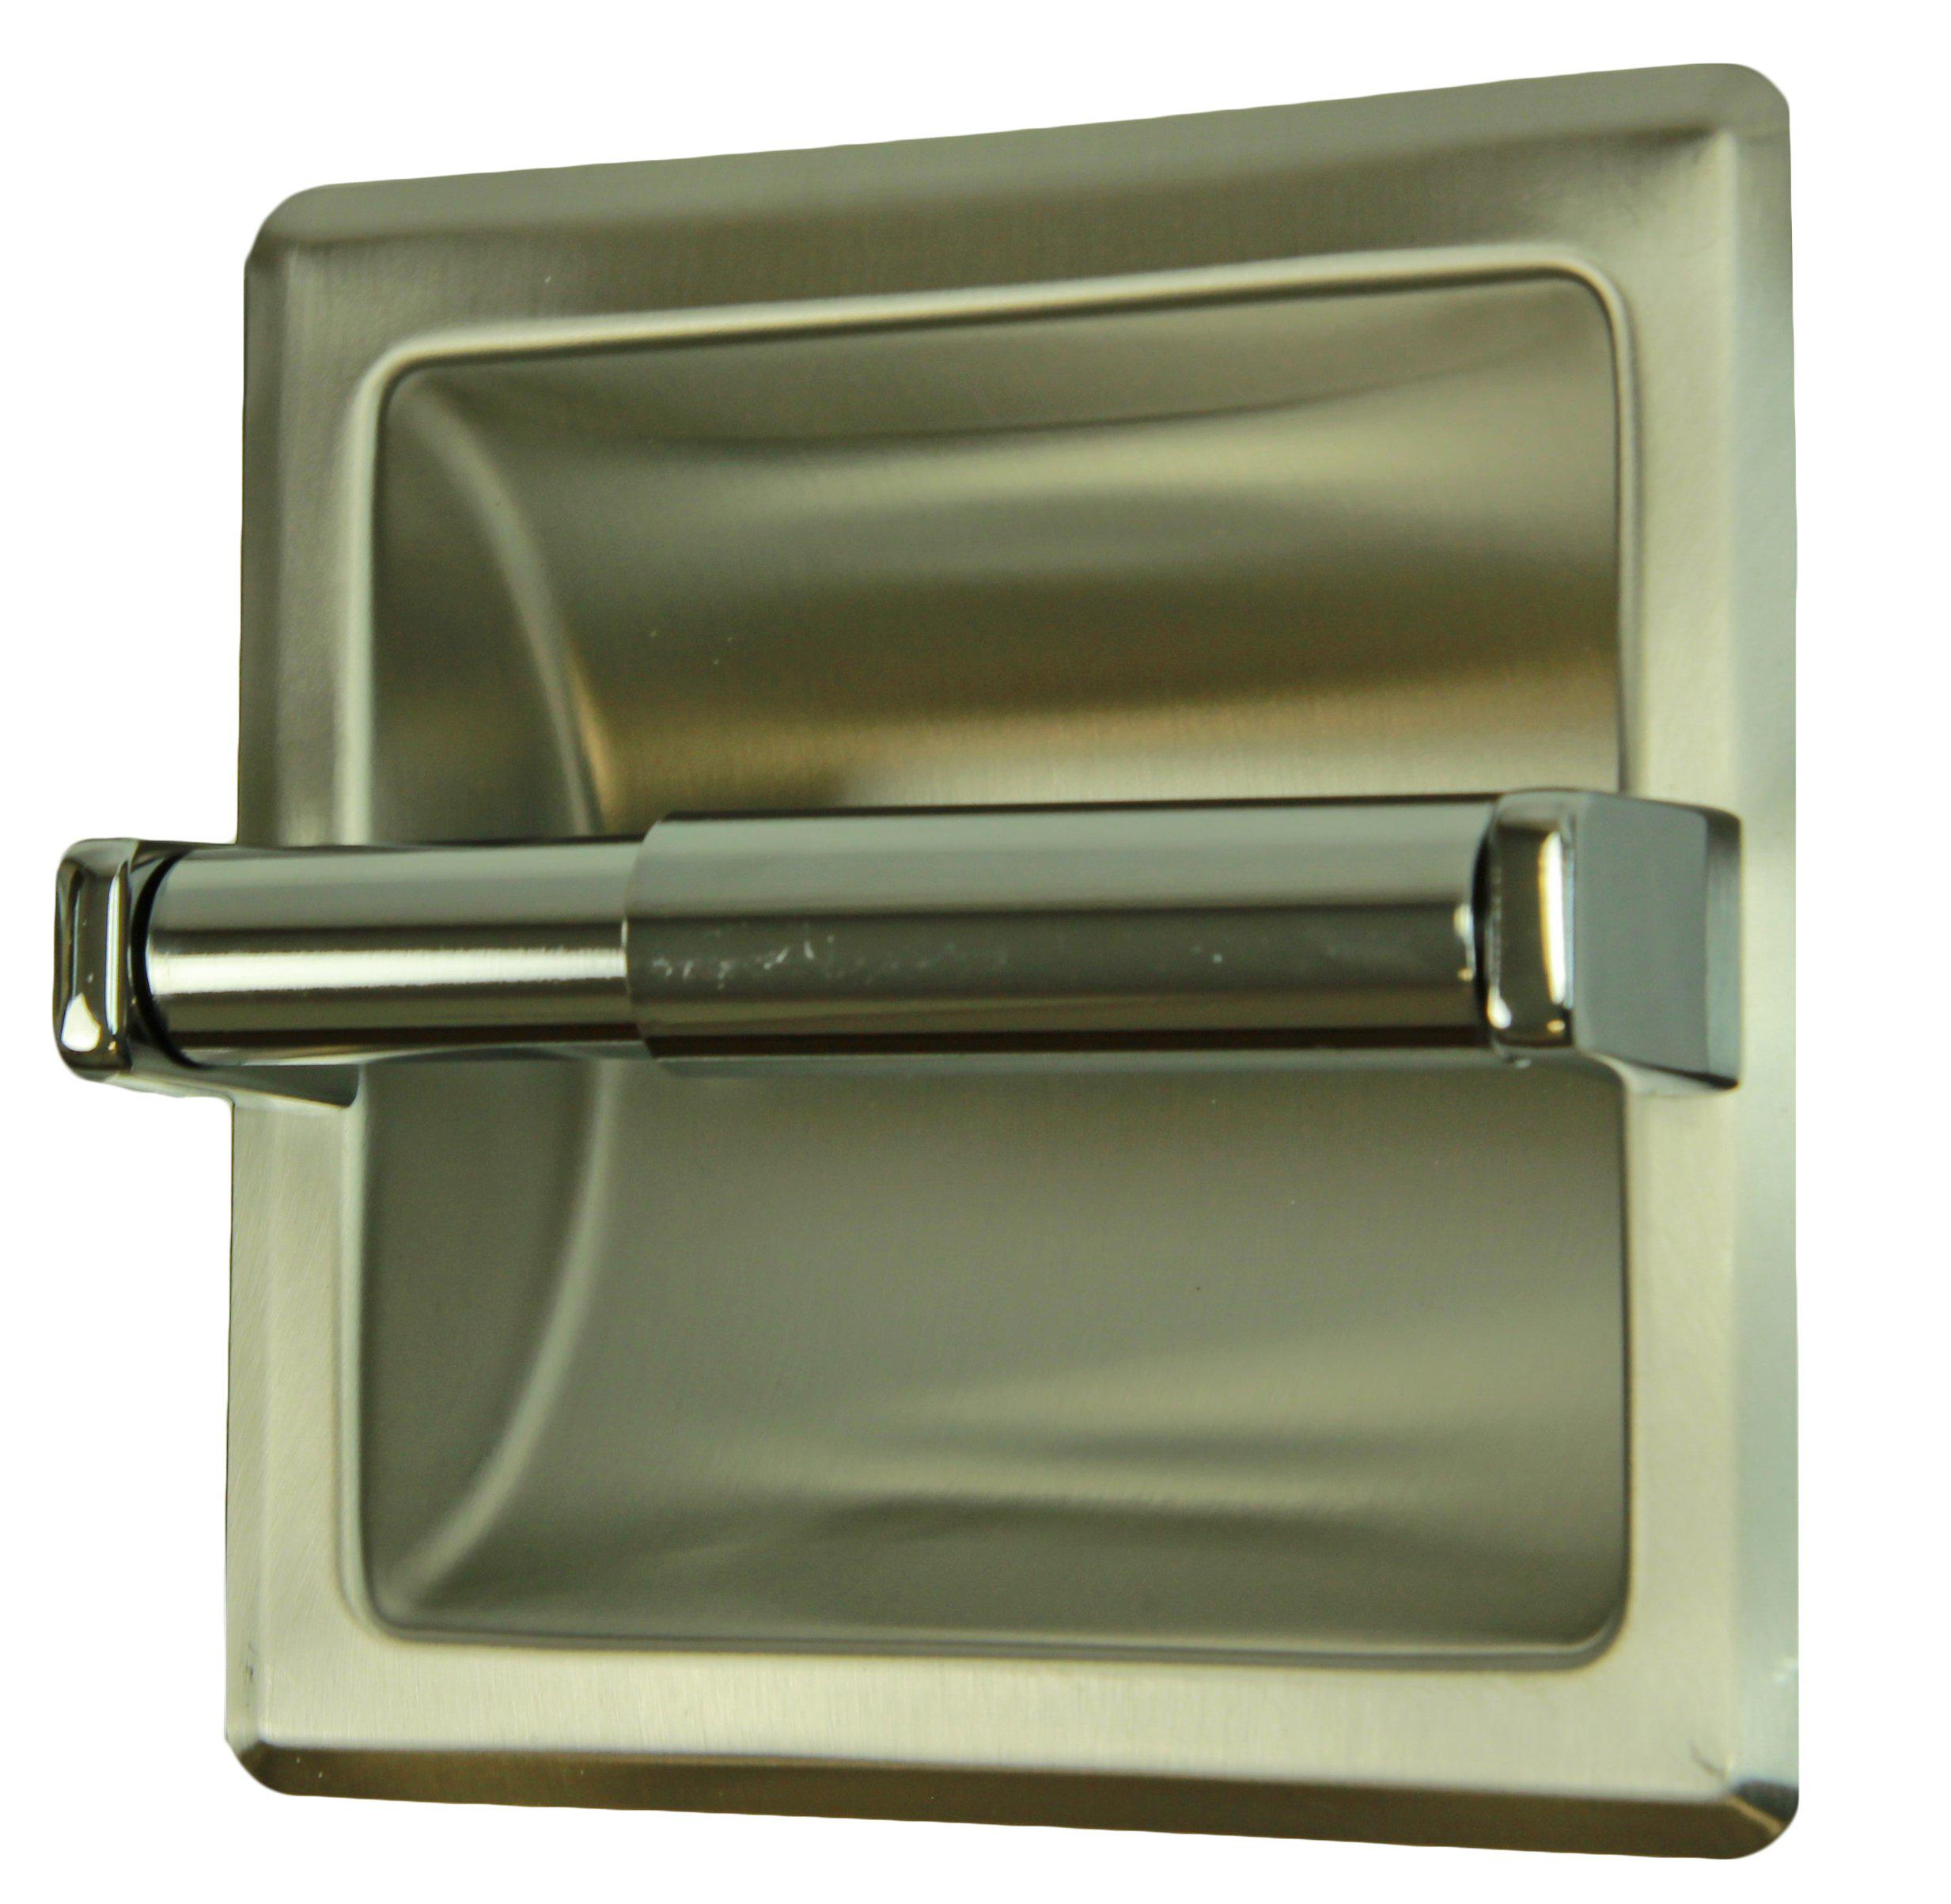 frost 1134-s toilet tissue holder, metallic